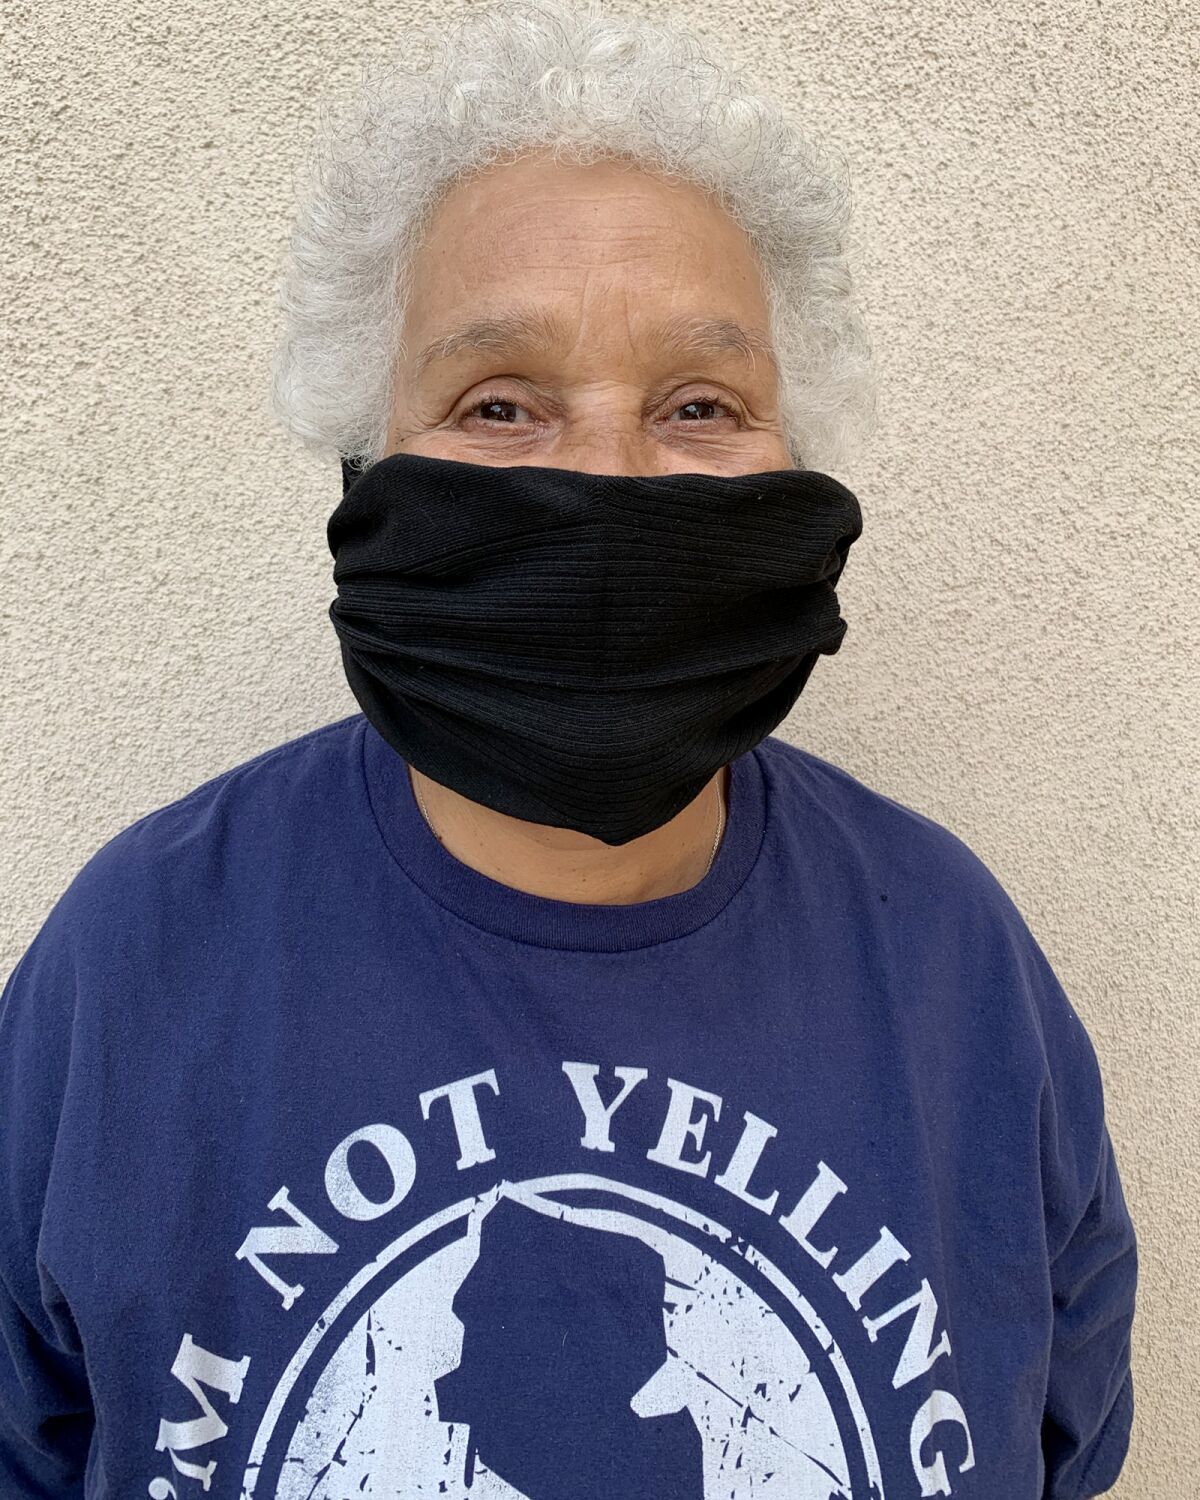 My mom, Brenda Lynch, 76, ready for her pharmacy run.